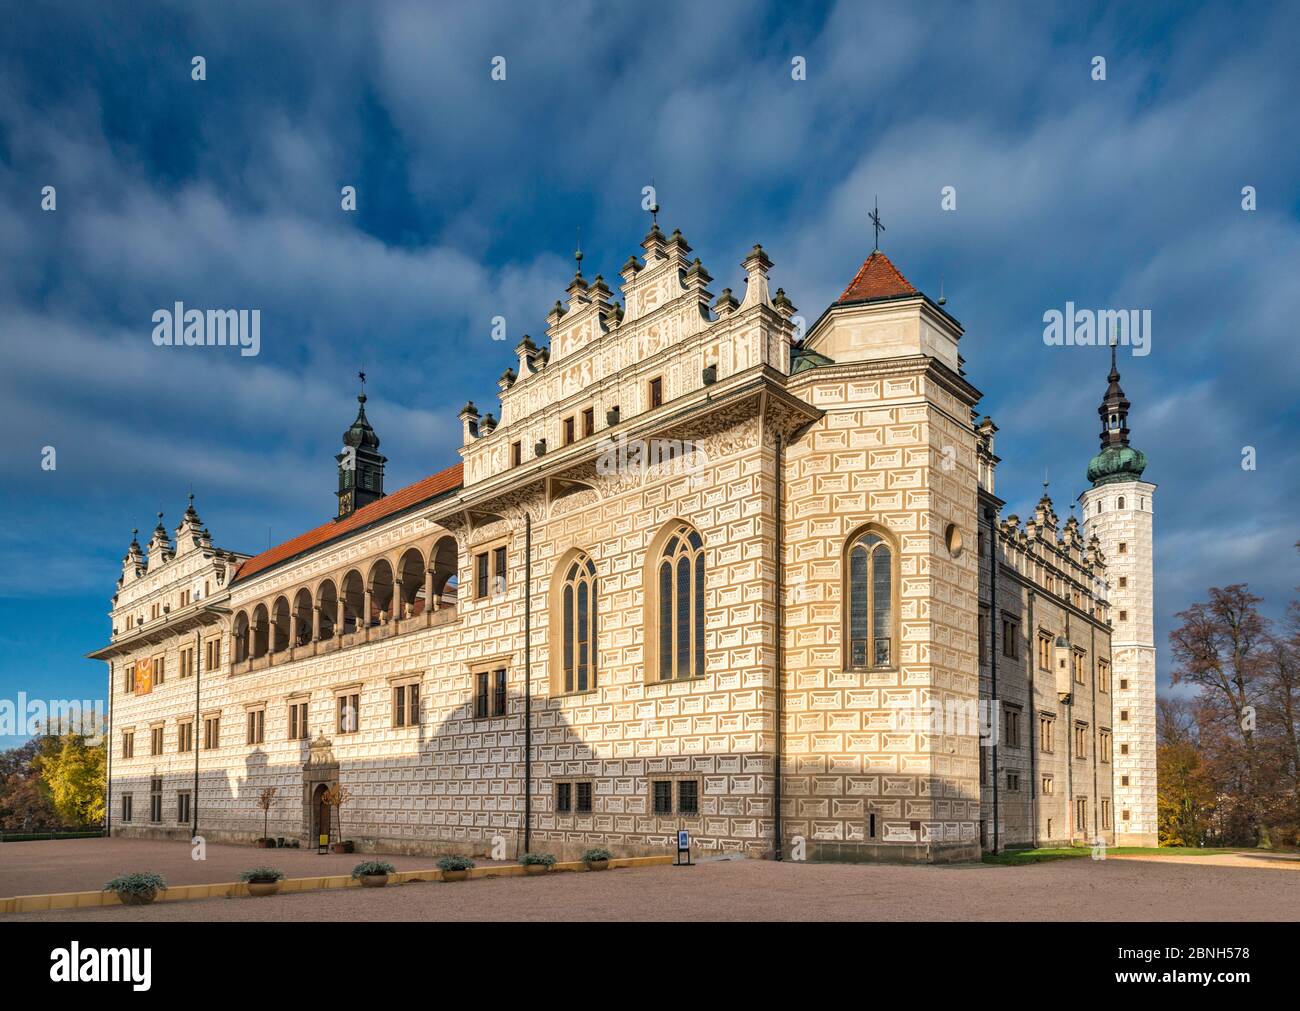 Litomysl Castle, 16th century, Renaissance style, UNESCO World Heritage Site, in Litomysl, Bohemia, Czech Republic, Central Europe Stock Photo